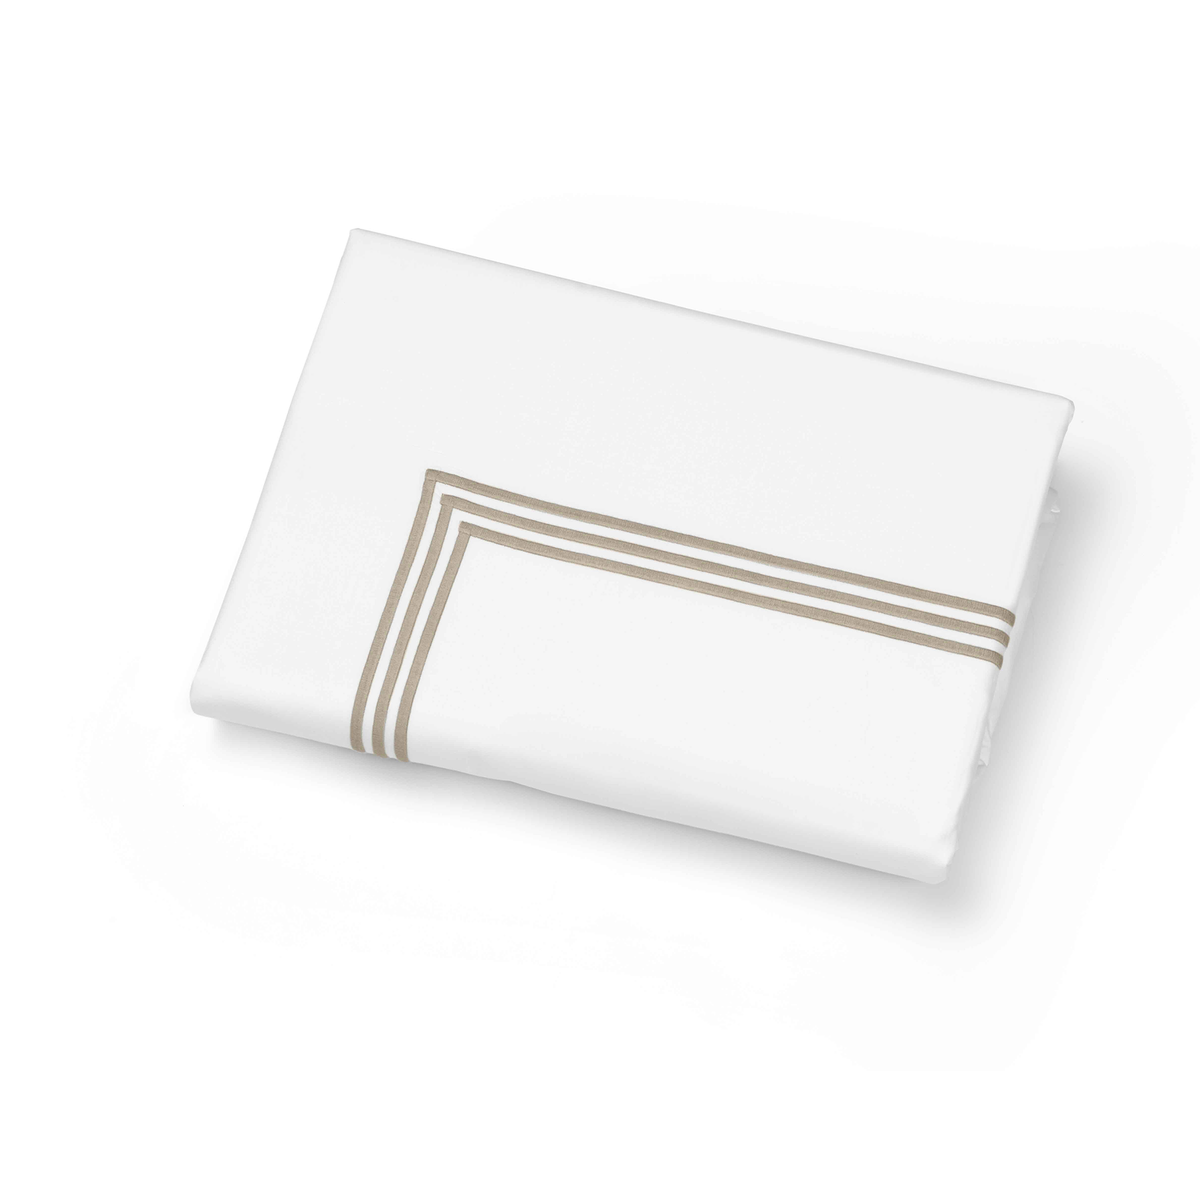 Folded Duvet Cover of Signoria Platinum Percale Bedding in White/Taupe Color